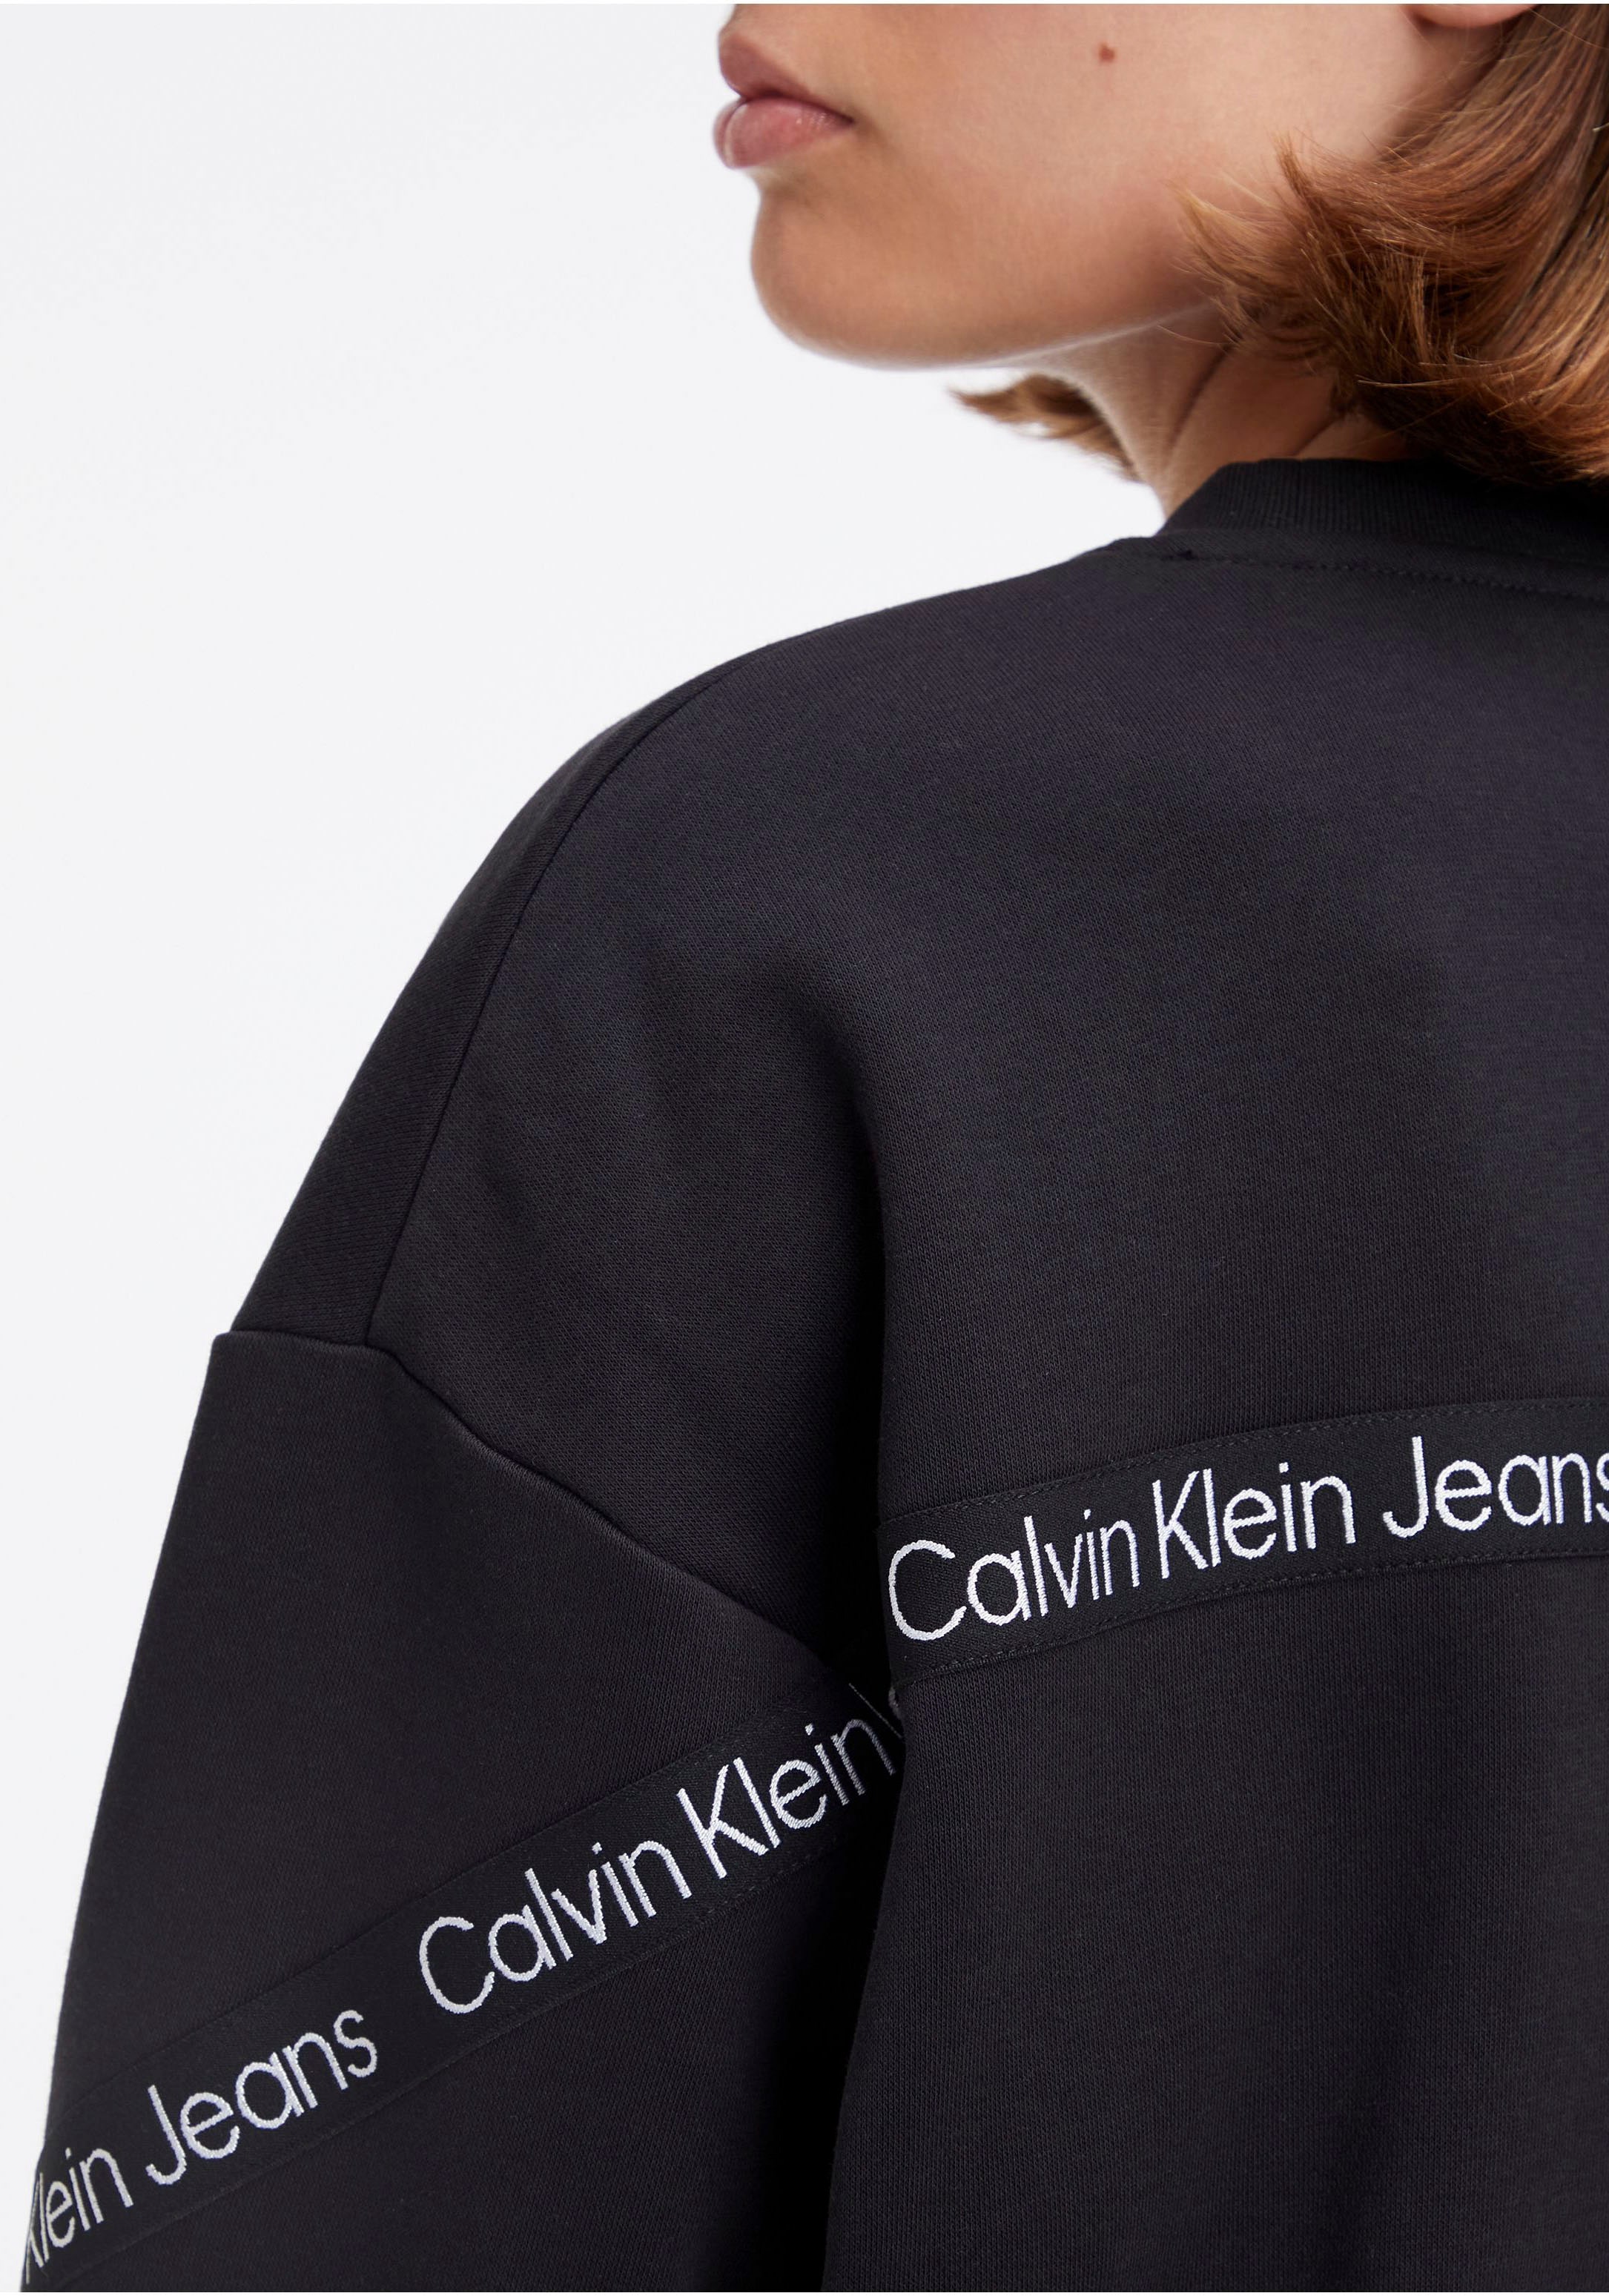 Sweatshirt, Applikationen I\'m Logo-Tape shoppen Klein mit | Jeans walking Calvin